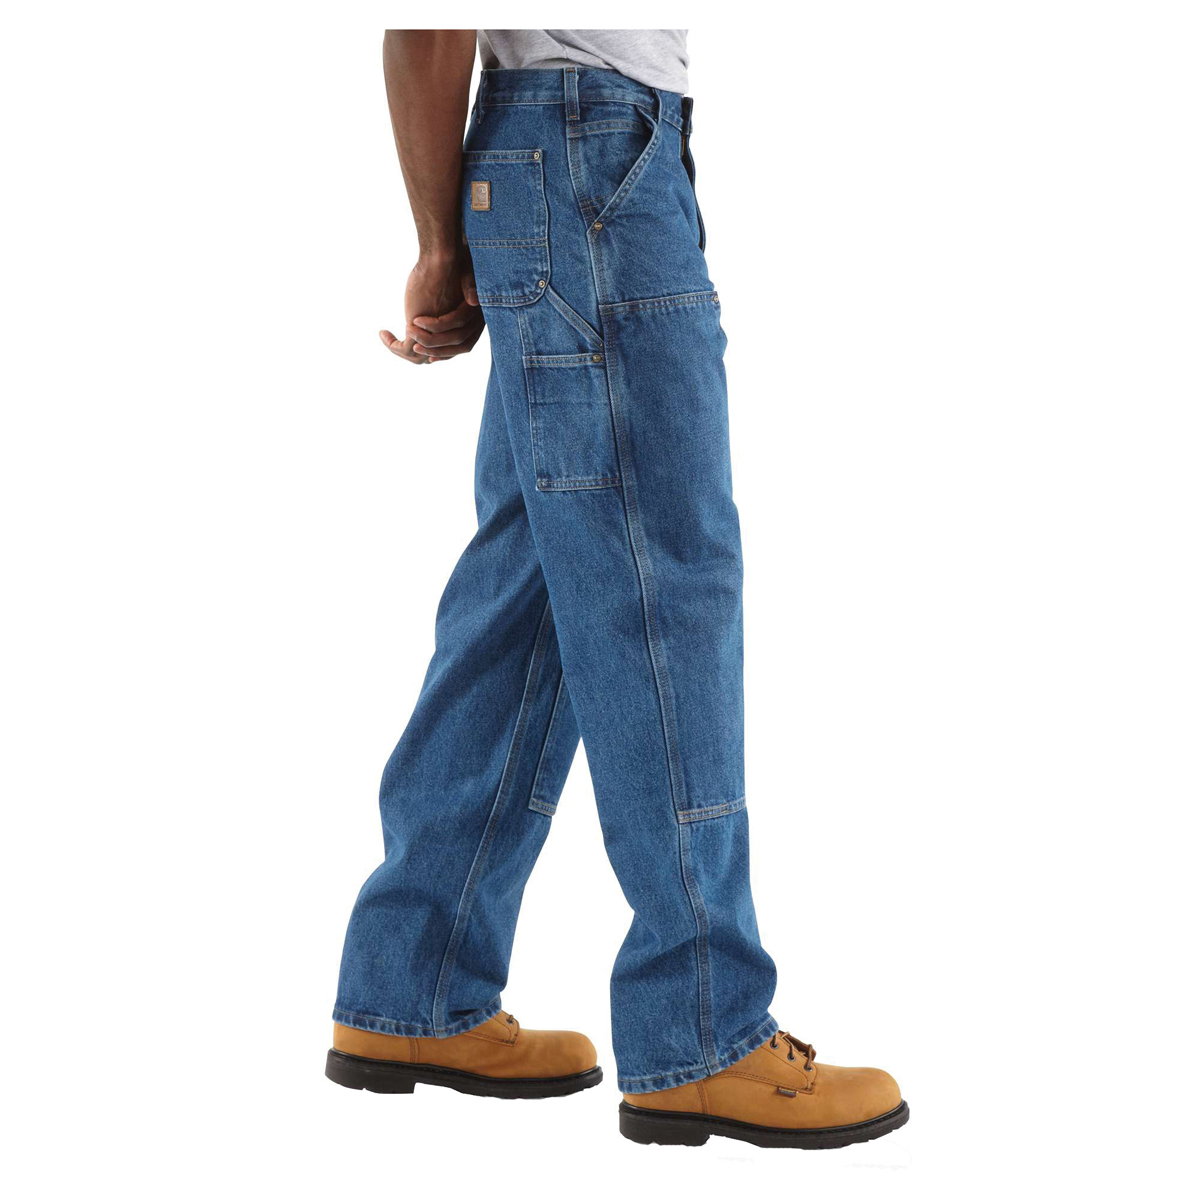 Carhartt B73-DST-33X34 Utility Logger Jeans, 33 in Waist, 34 in L Inseam, Darkstone, Loose Fit - 7